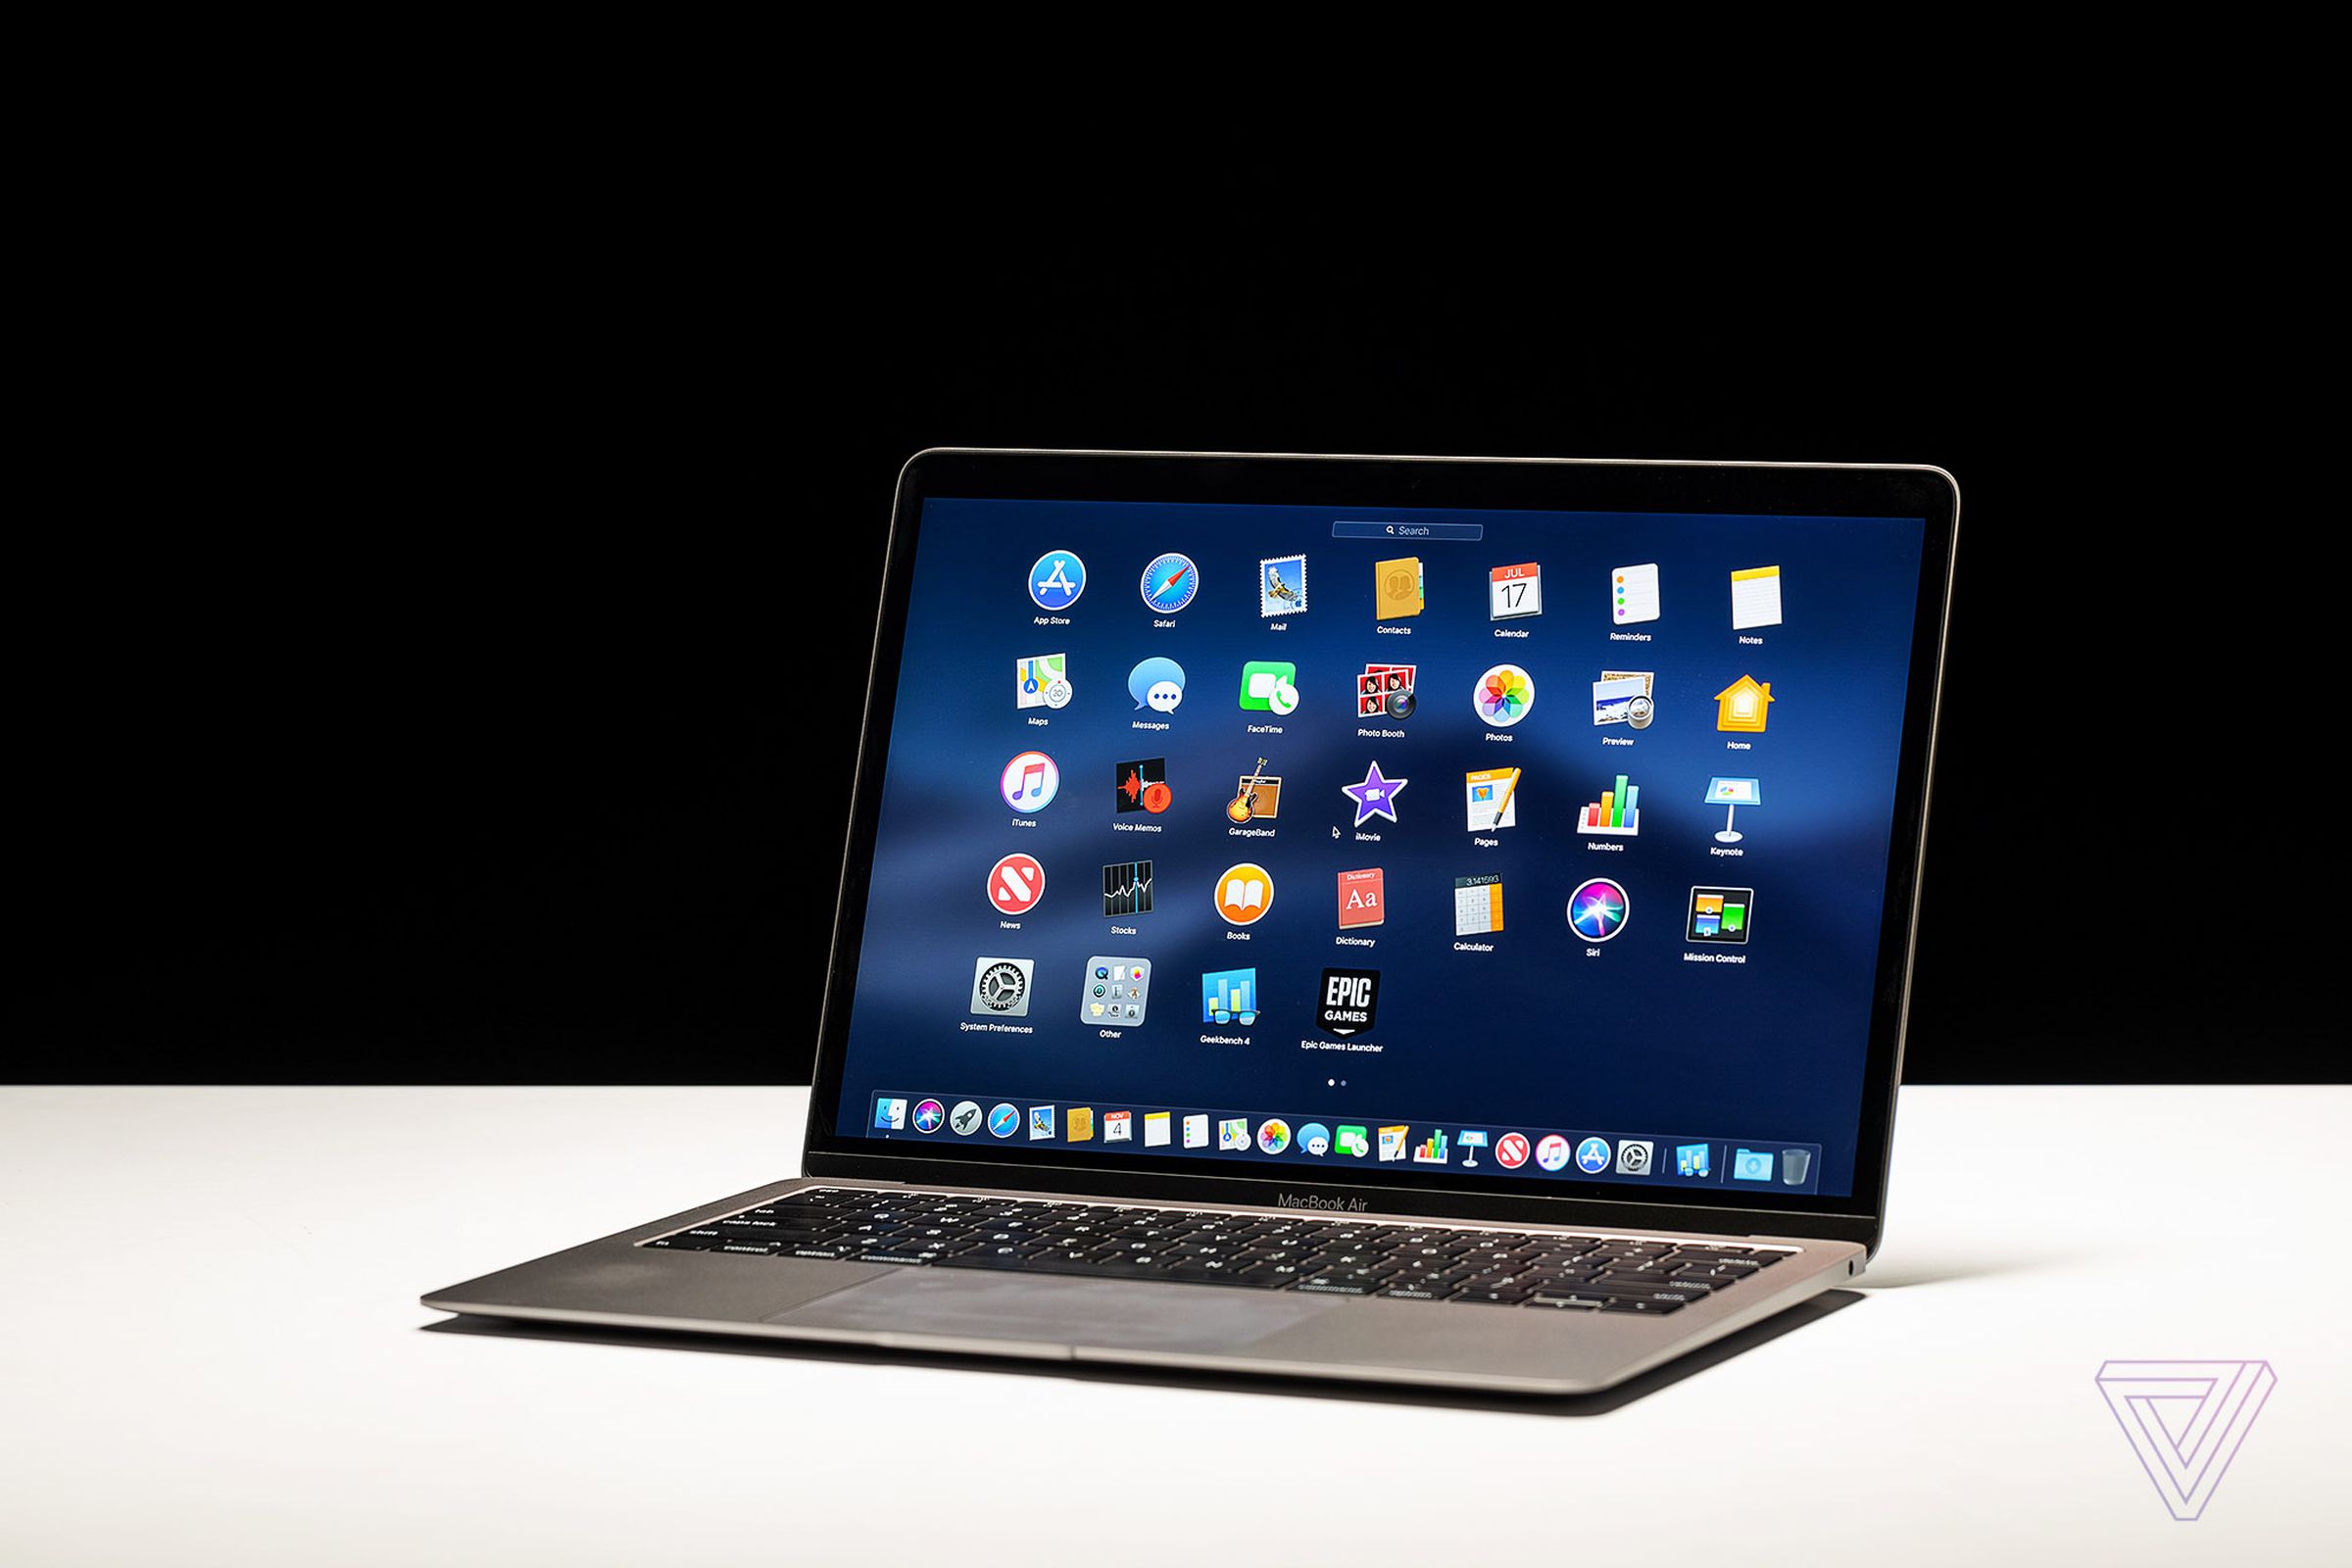 Apple MacBook Air 2018 review: Retina Display and new keyboard - The Verge